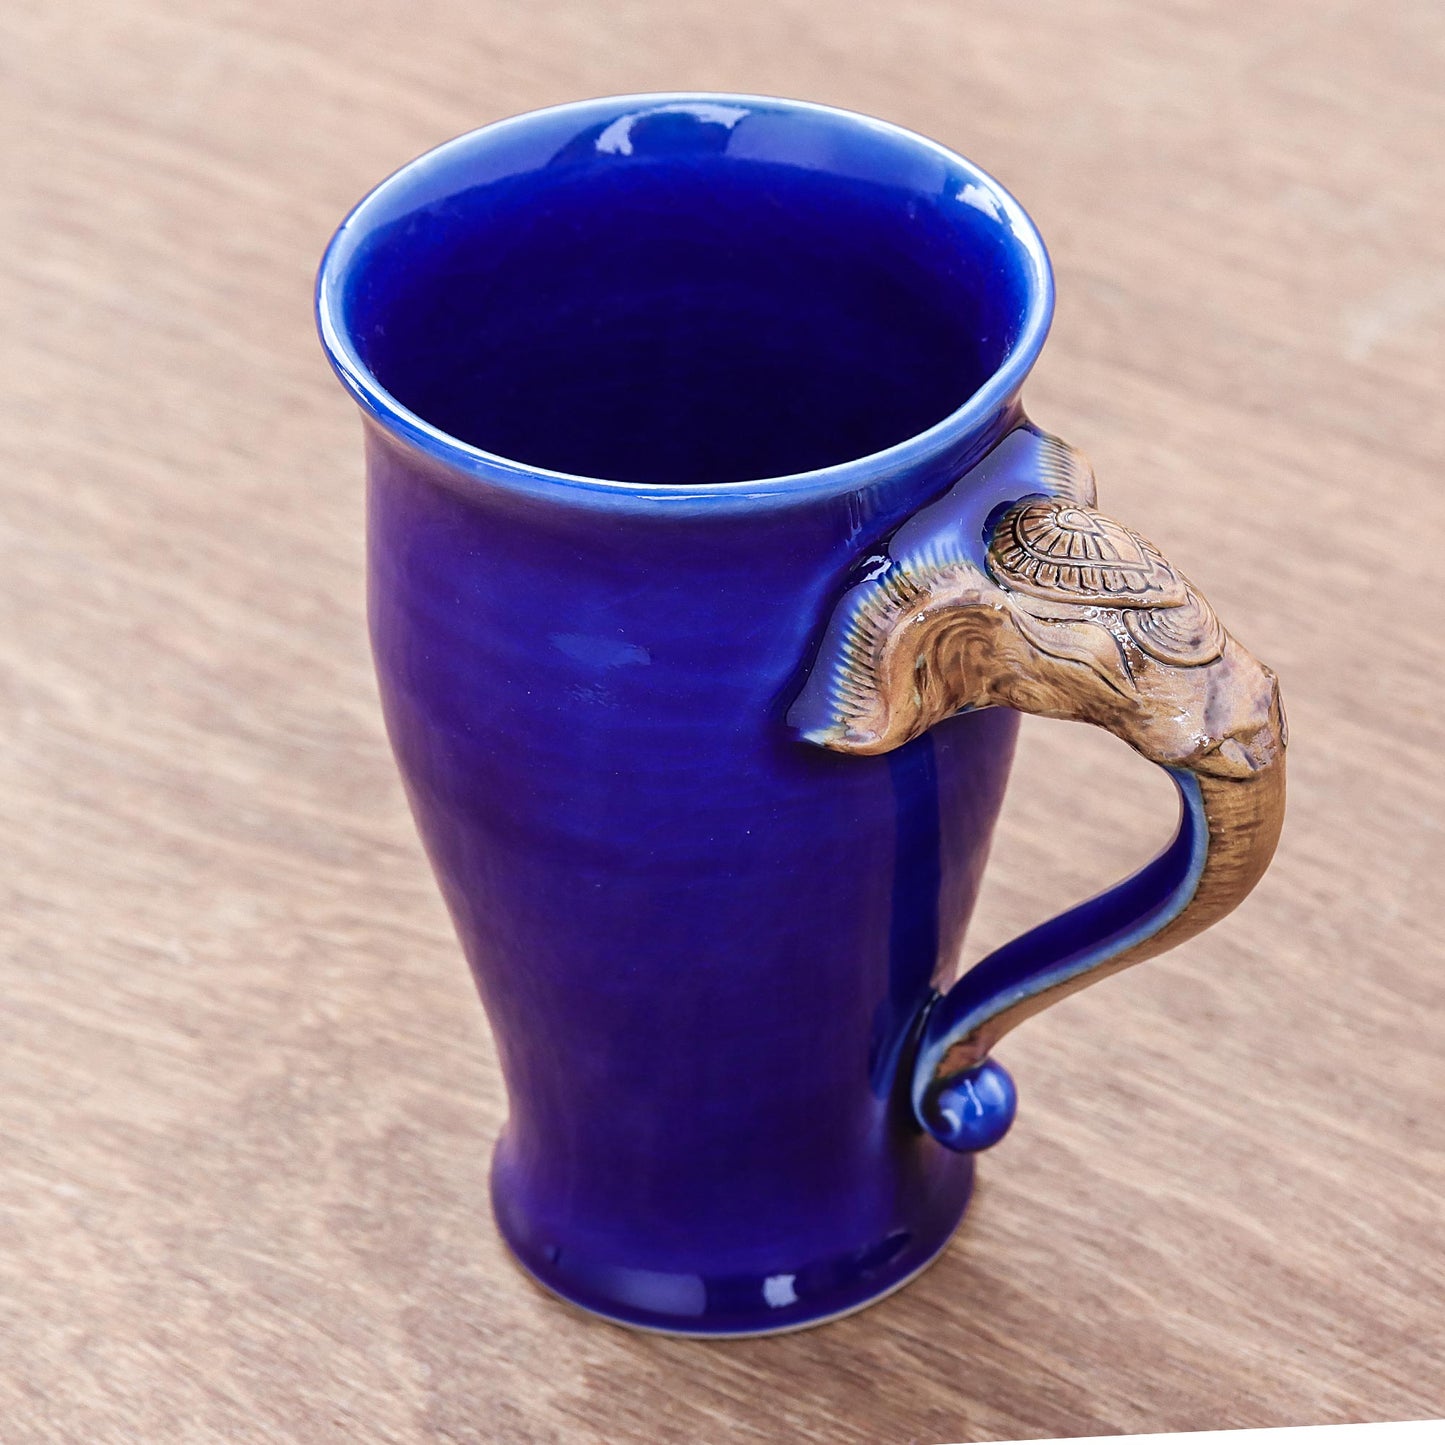 Elephant Handle in Blue Thai Elephant-Themed Celadon Ceramic Mug in Blue